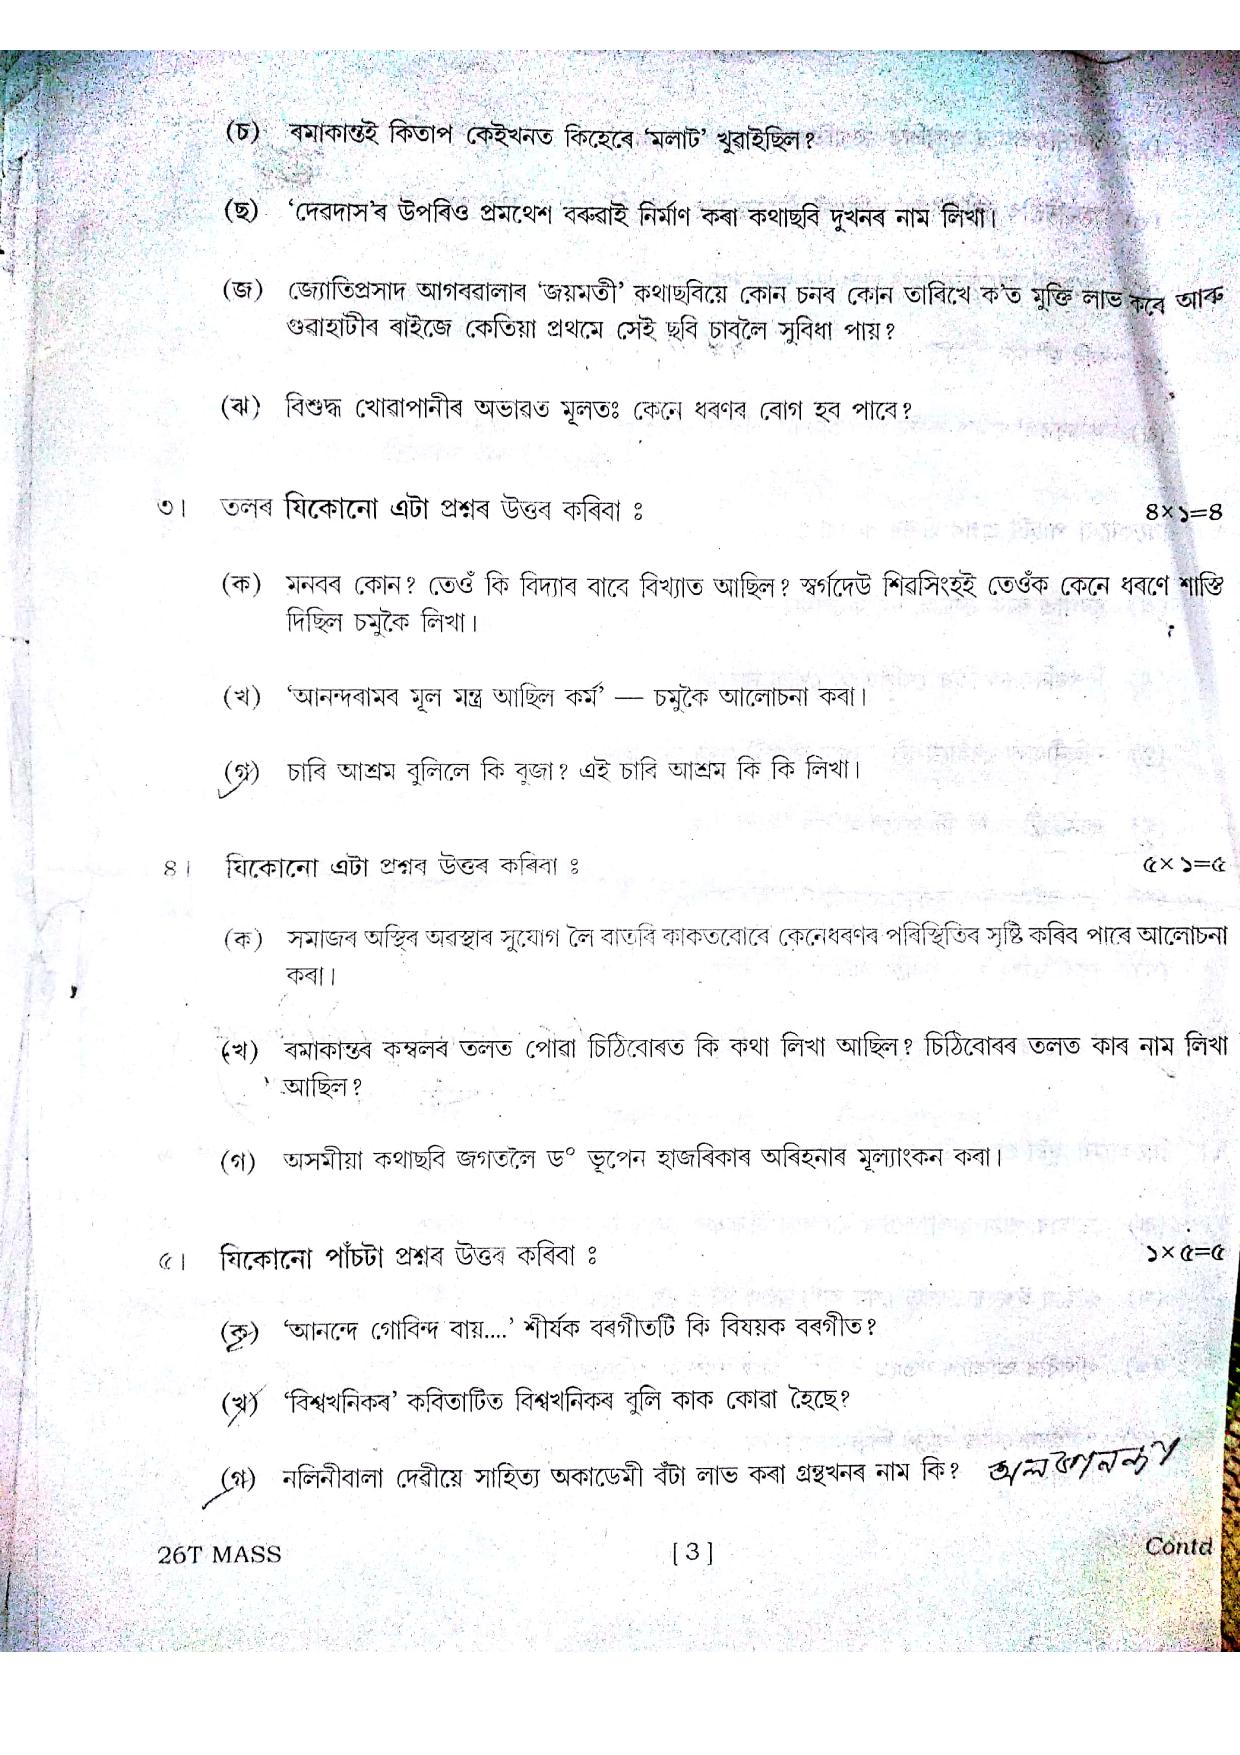 Assam HS 2nd Year Assamese MIL 2016 Question Paper - Page 3